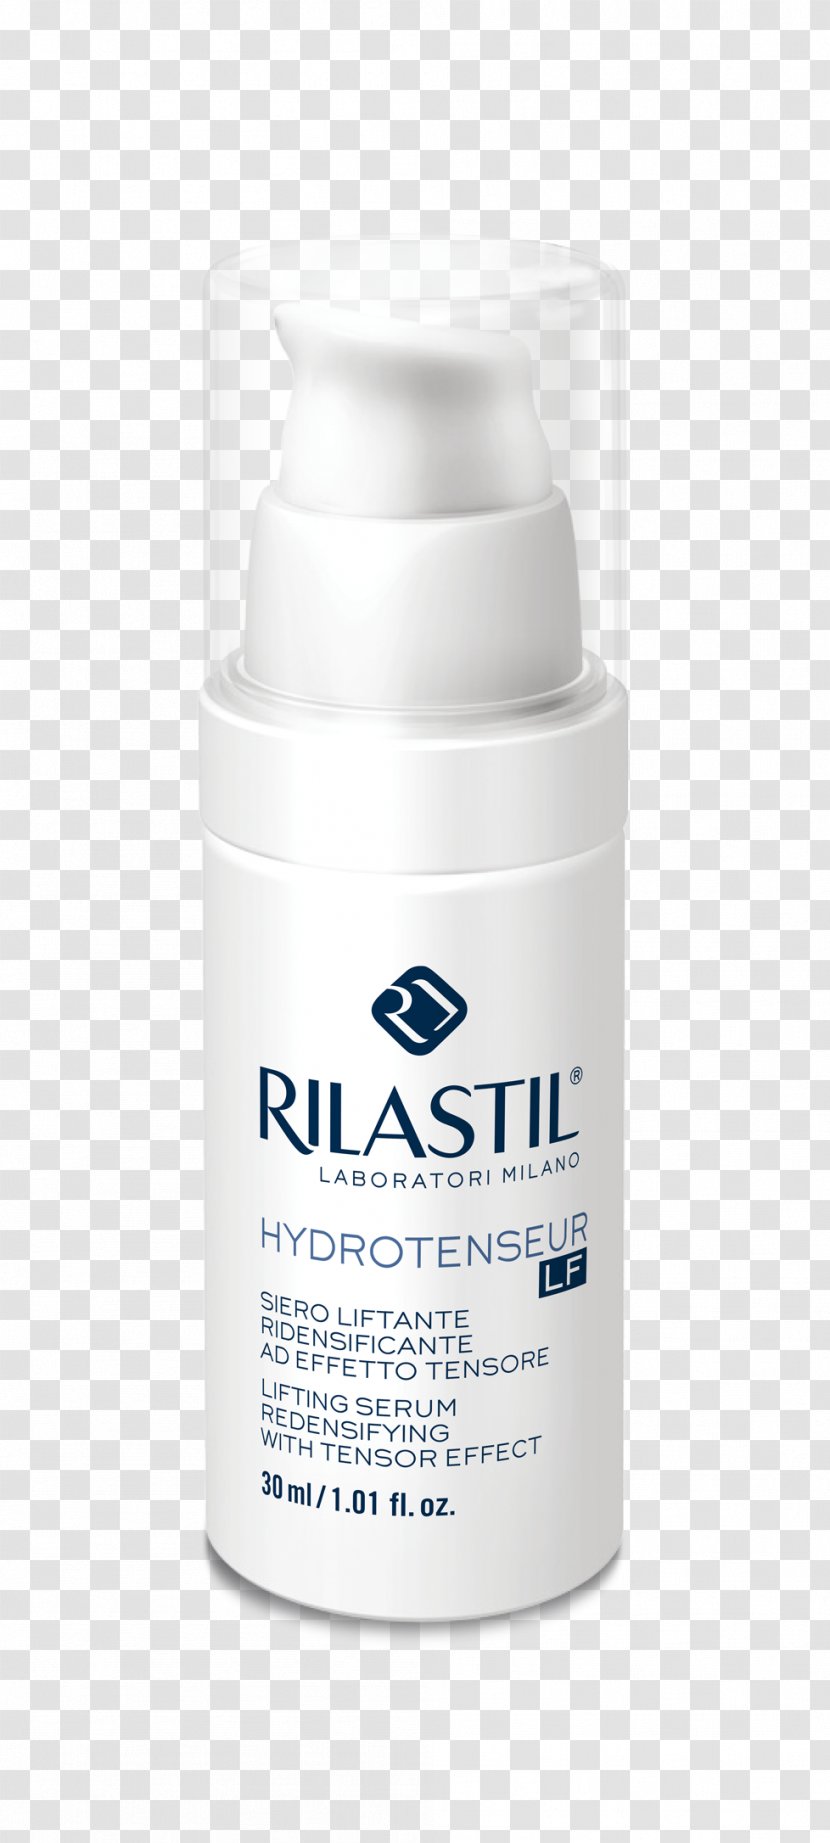 Rilastil Cosmetics Face Algenist Retinol Firming & Lifting Serum Rhytidectomy Transparent PNG